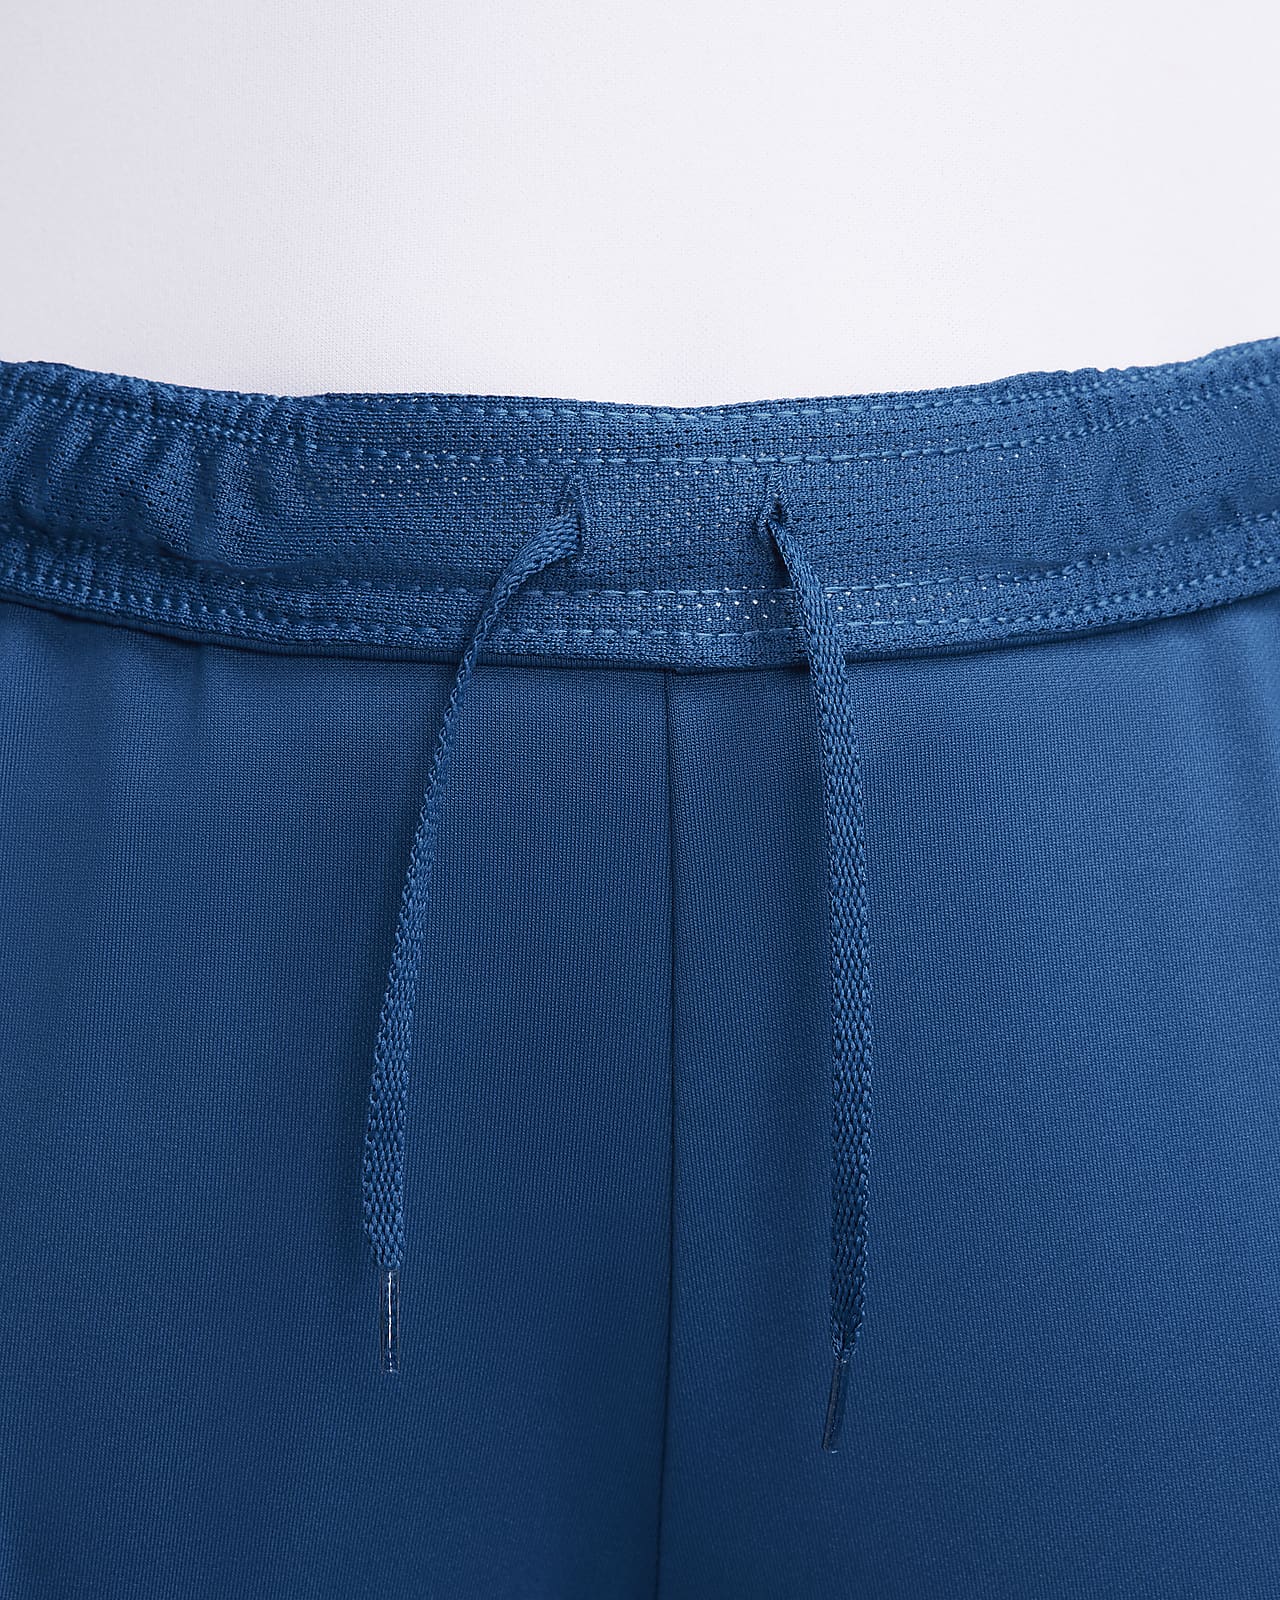 Nike Dri-Fit Blue Pants Activewear Soccer Football Women sz Medium Ankle  Zipper